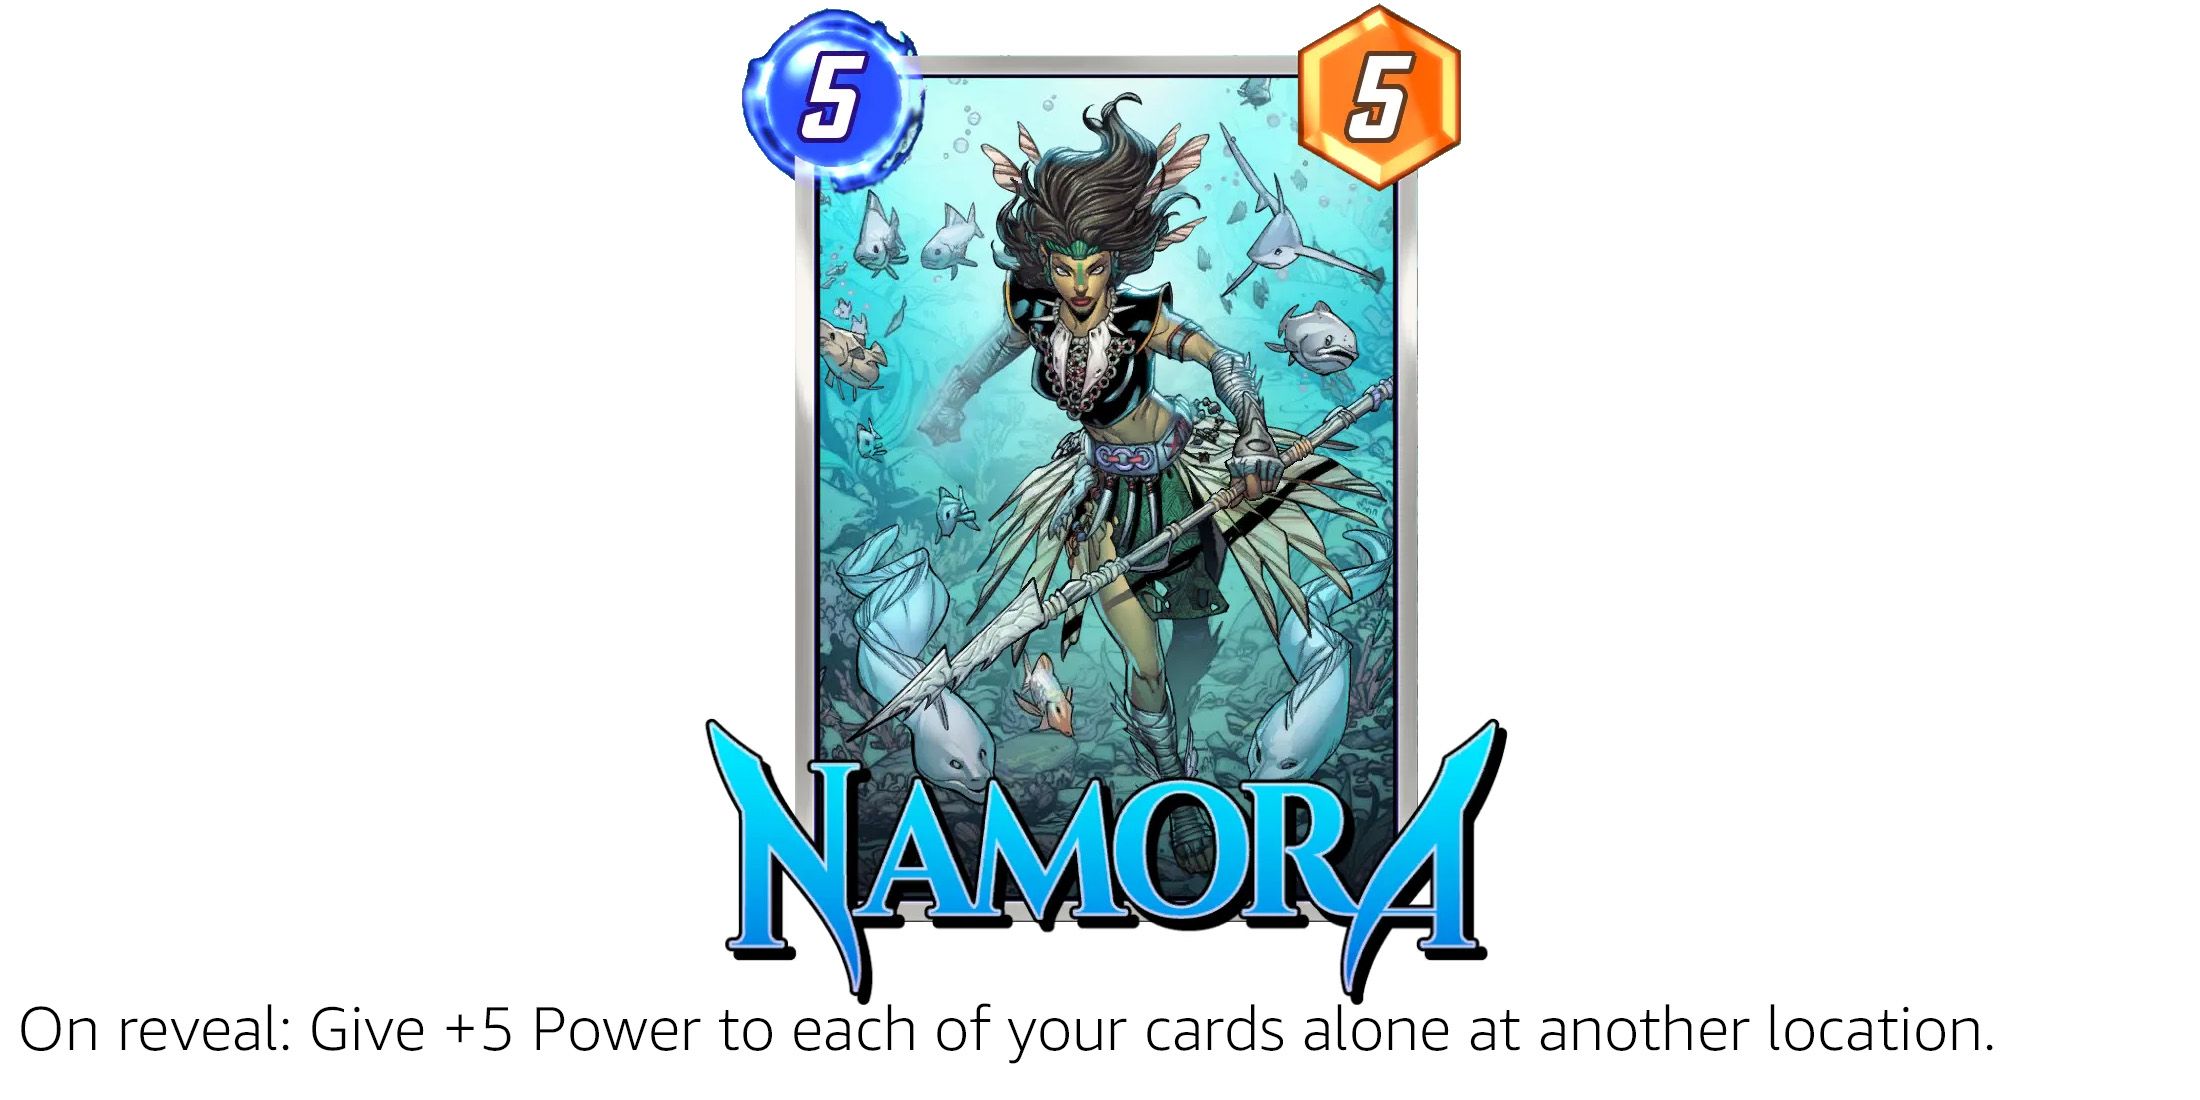 Marvel Snap Namora card and ability description